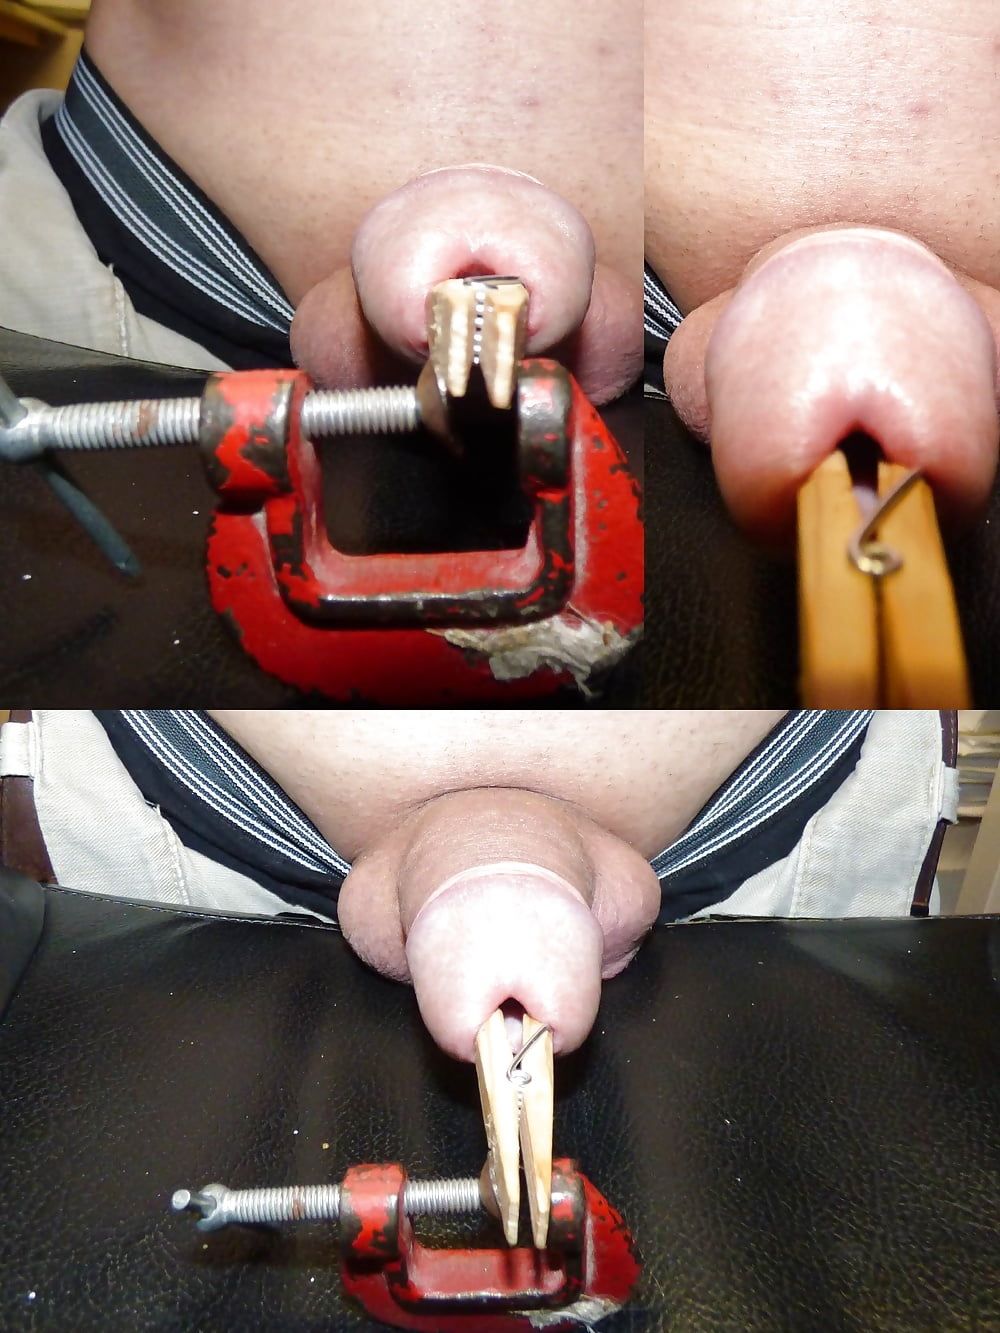 bdsm extreme insertions urethral anal femdom #25